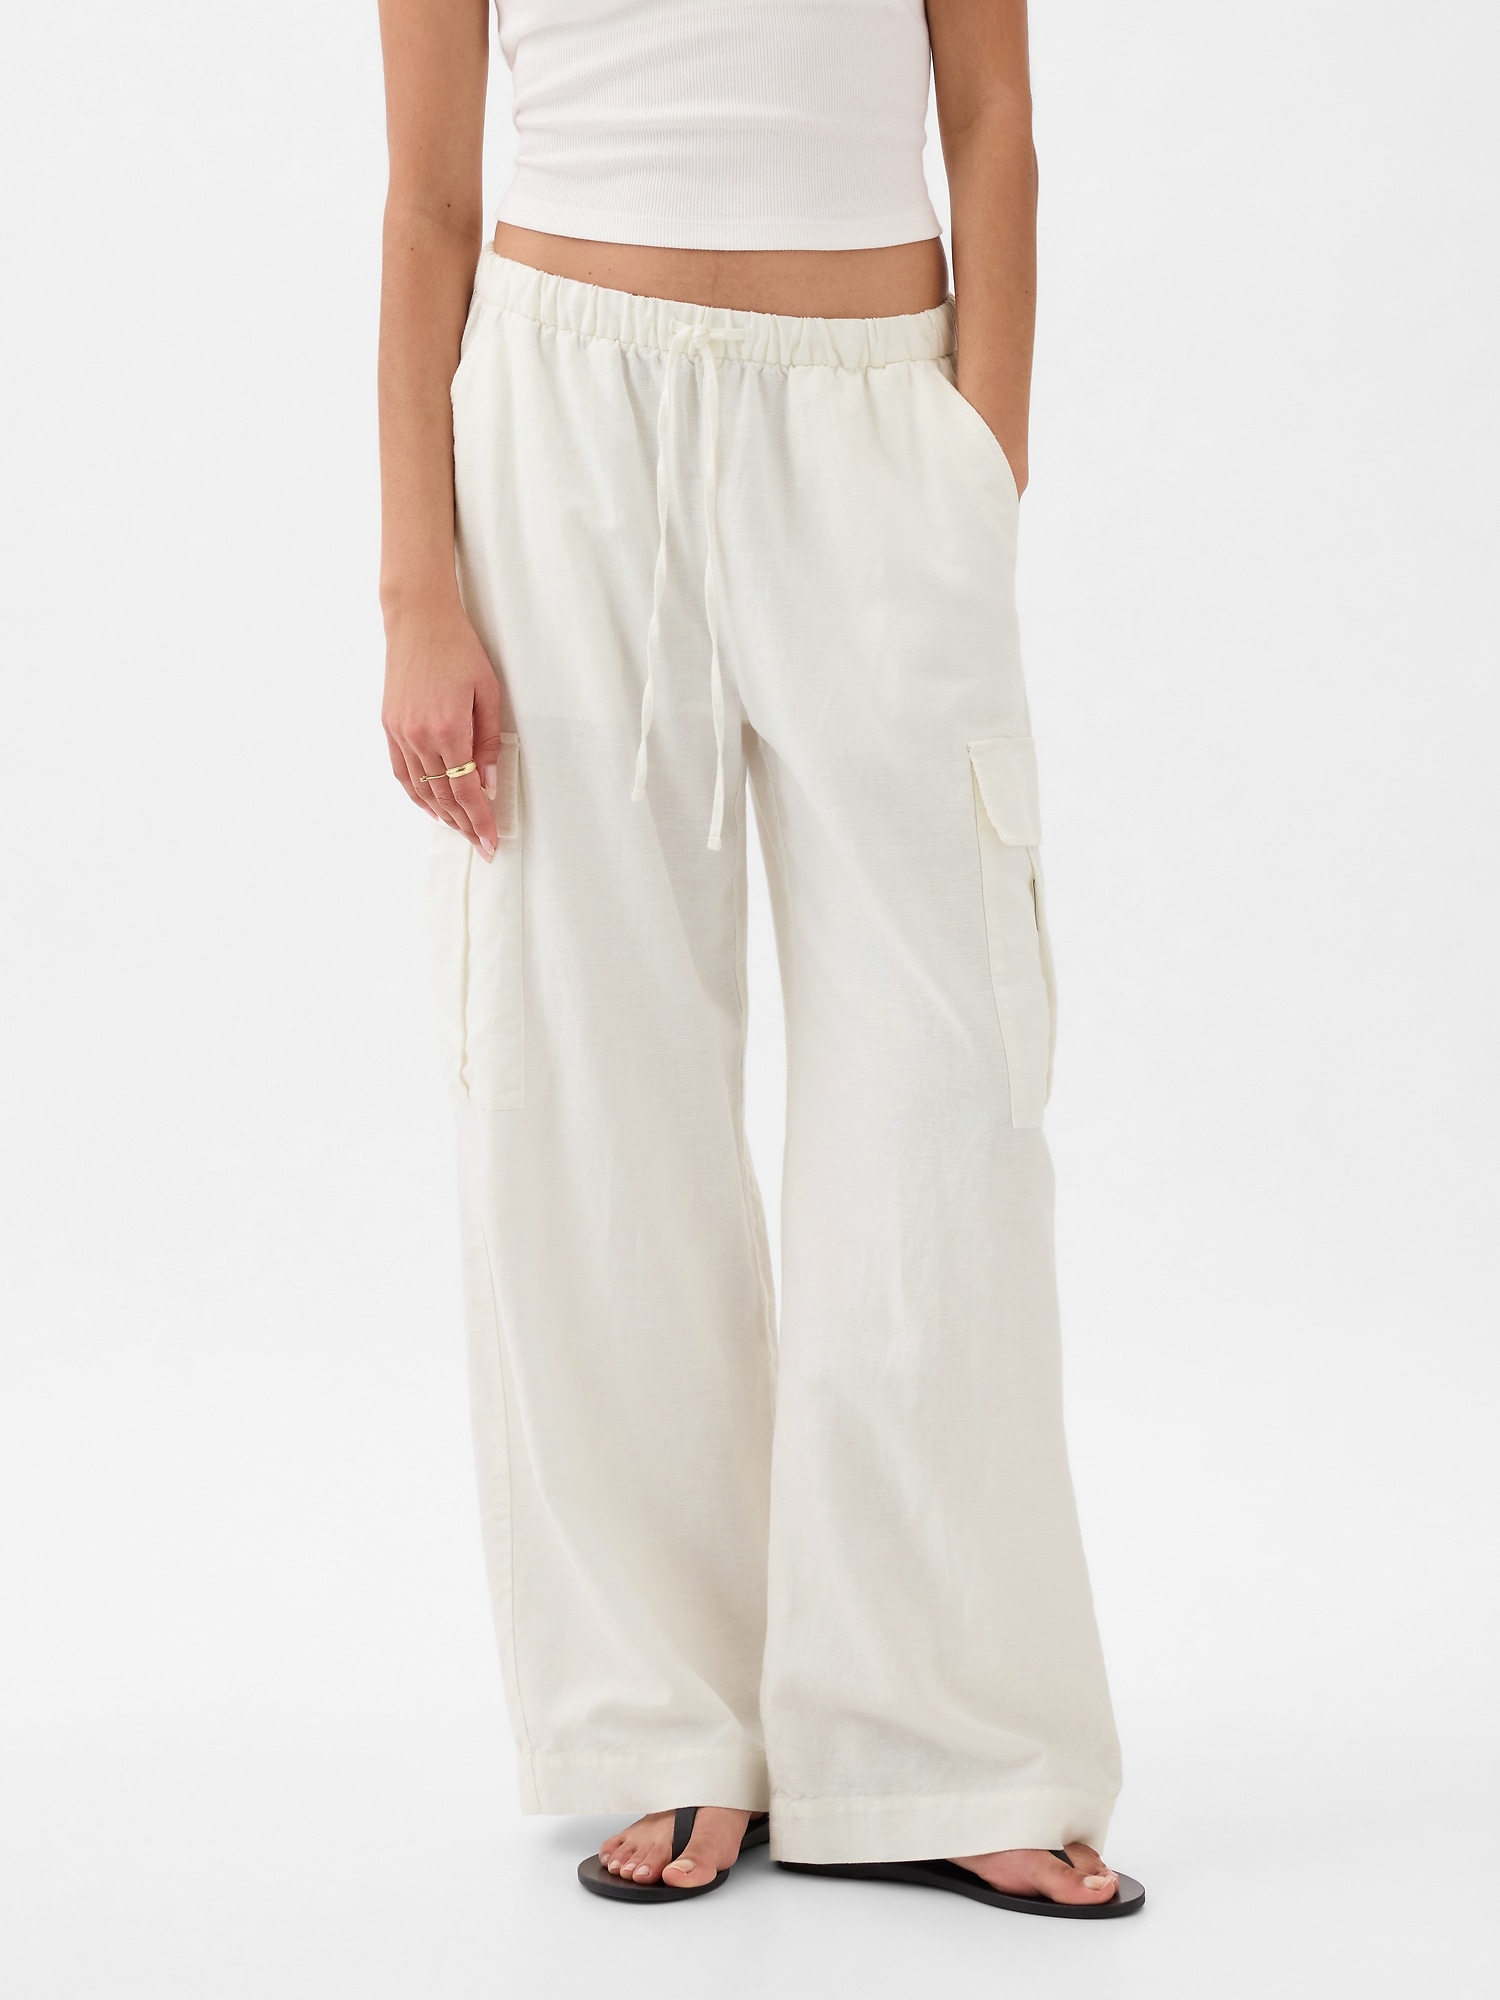 Women's Cotton Linen Look Long Lounge Pants Summer Beach Drawstring Loose  Fit Casual Trousers Plus Size